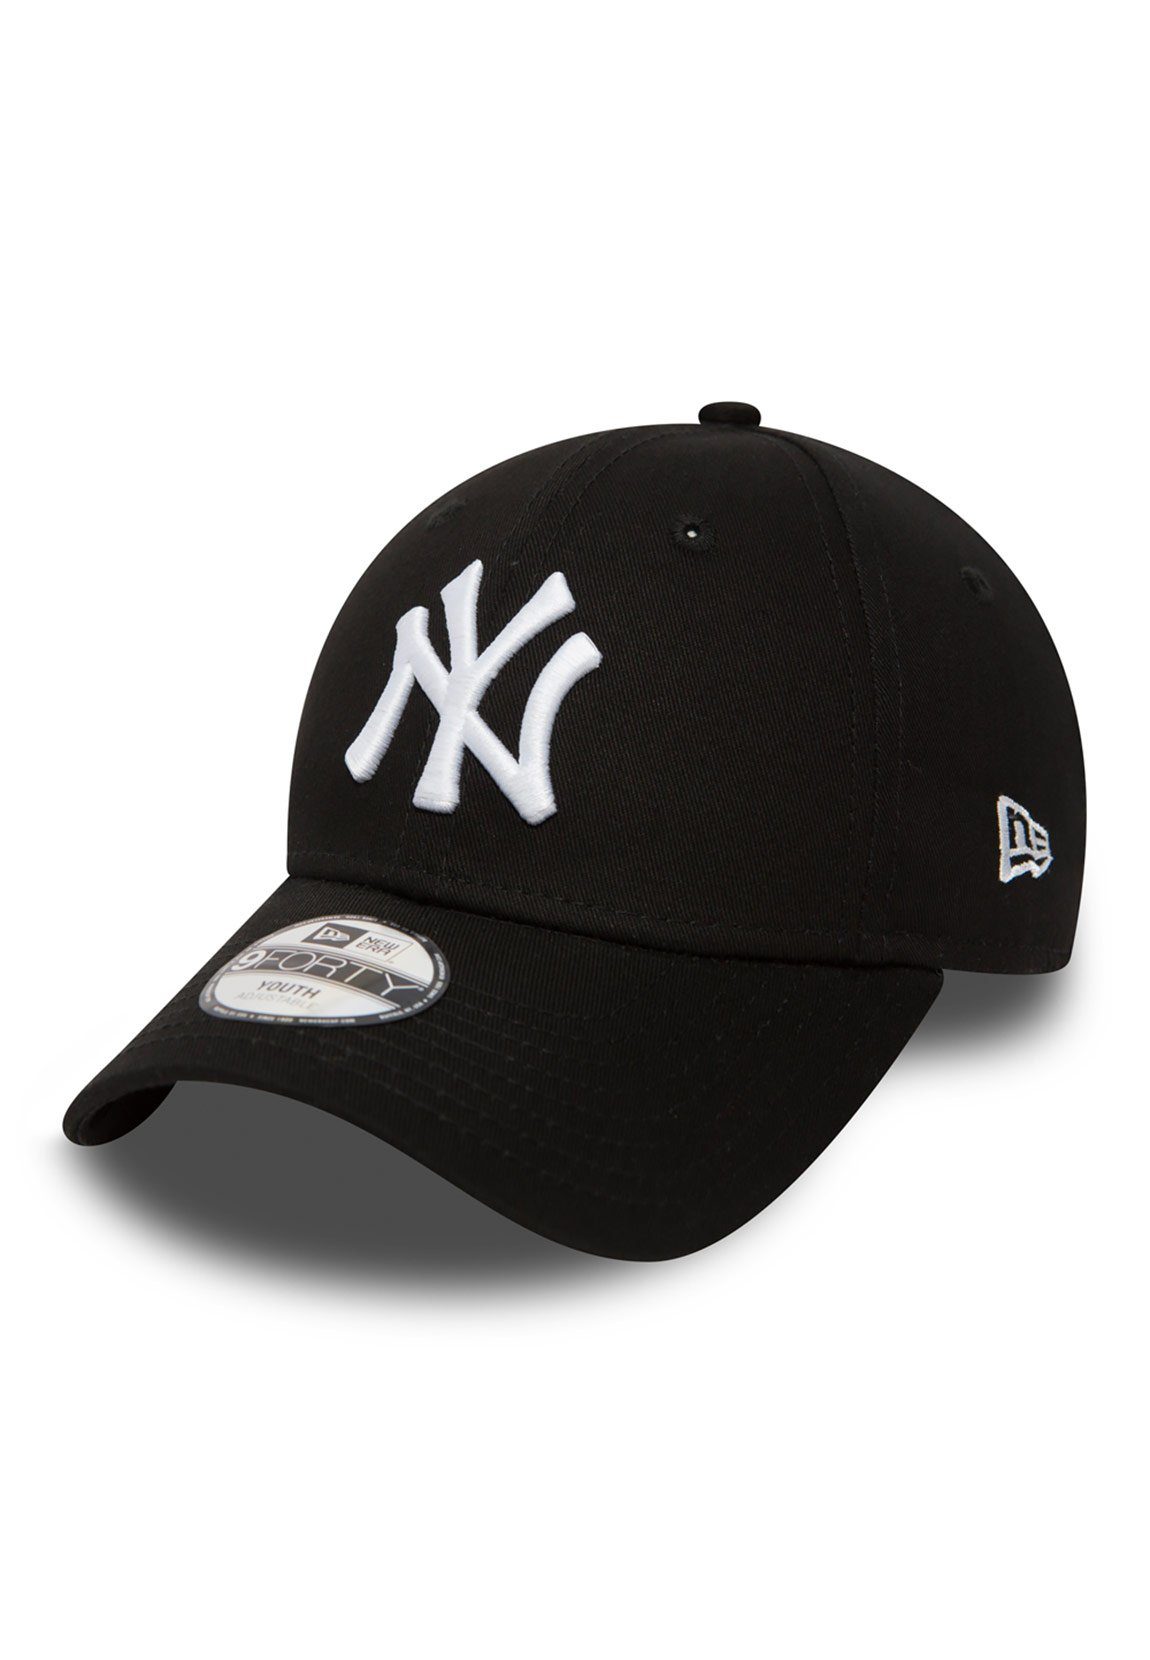 New Era Baseball Cap New Era Kids Cap Adjustables - NY YANKEES - Black-White schwarz-weiß